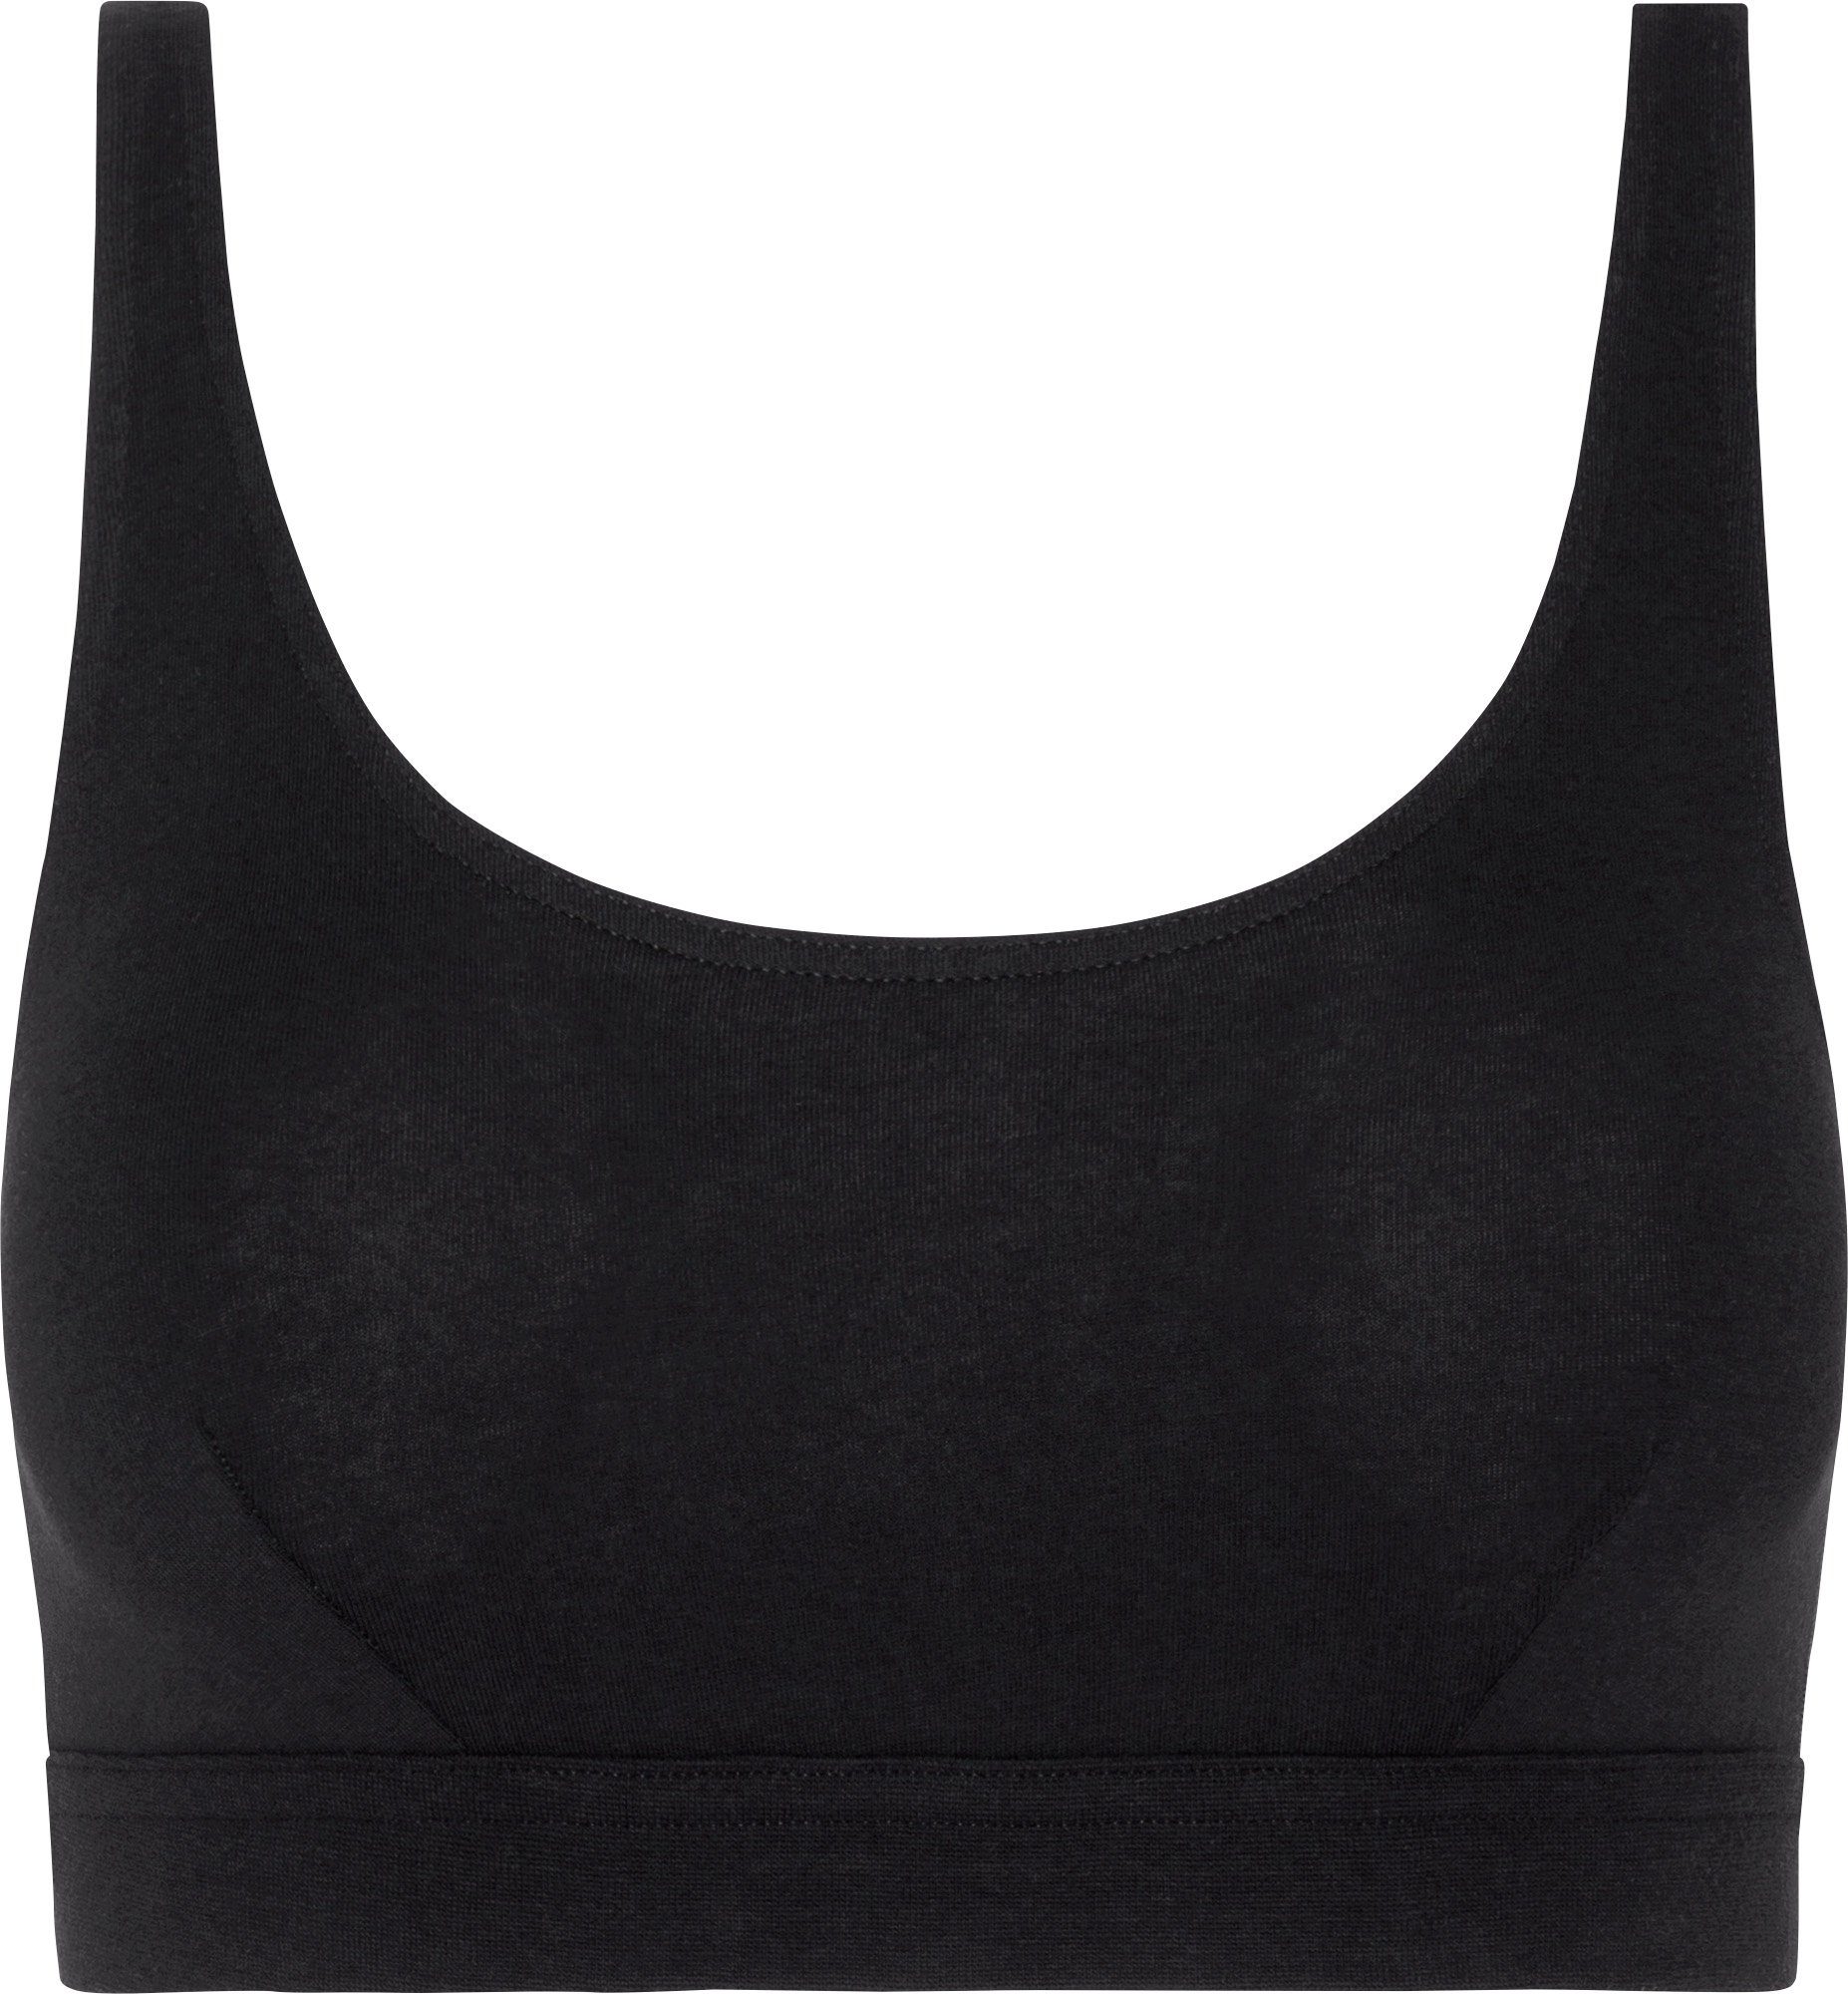 schwarz Single-Jersey Unterhemd Uni Damen-Bustier Pompadour